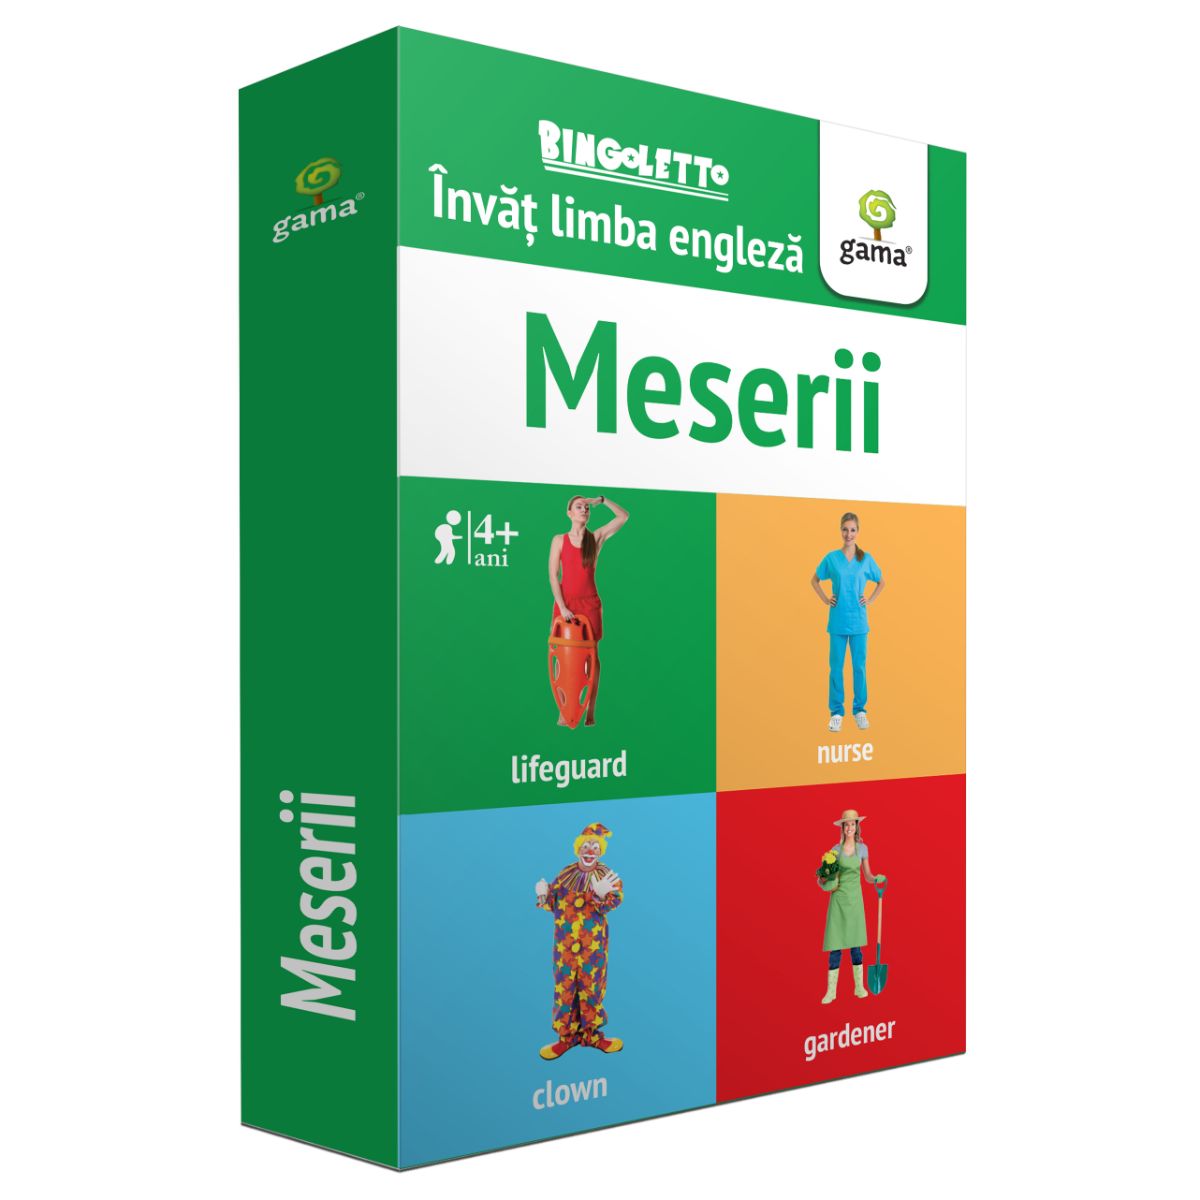 Meserii, Invat limba engleza, Bingoletto Carti pentru copii imagine 2022